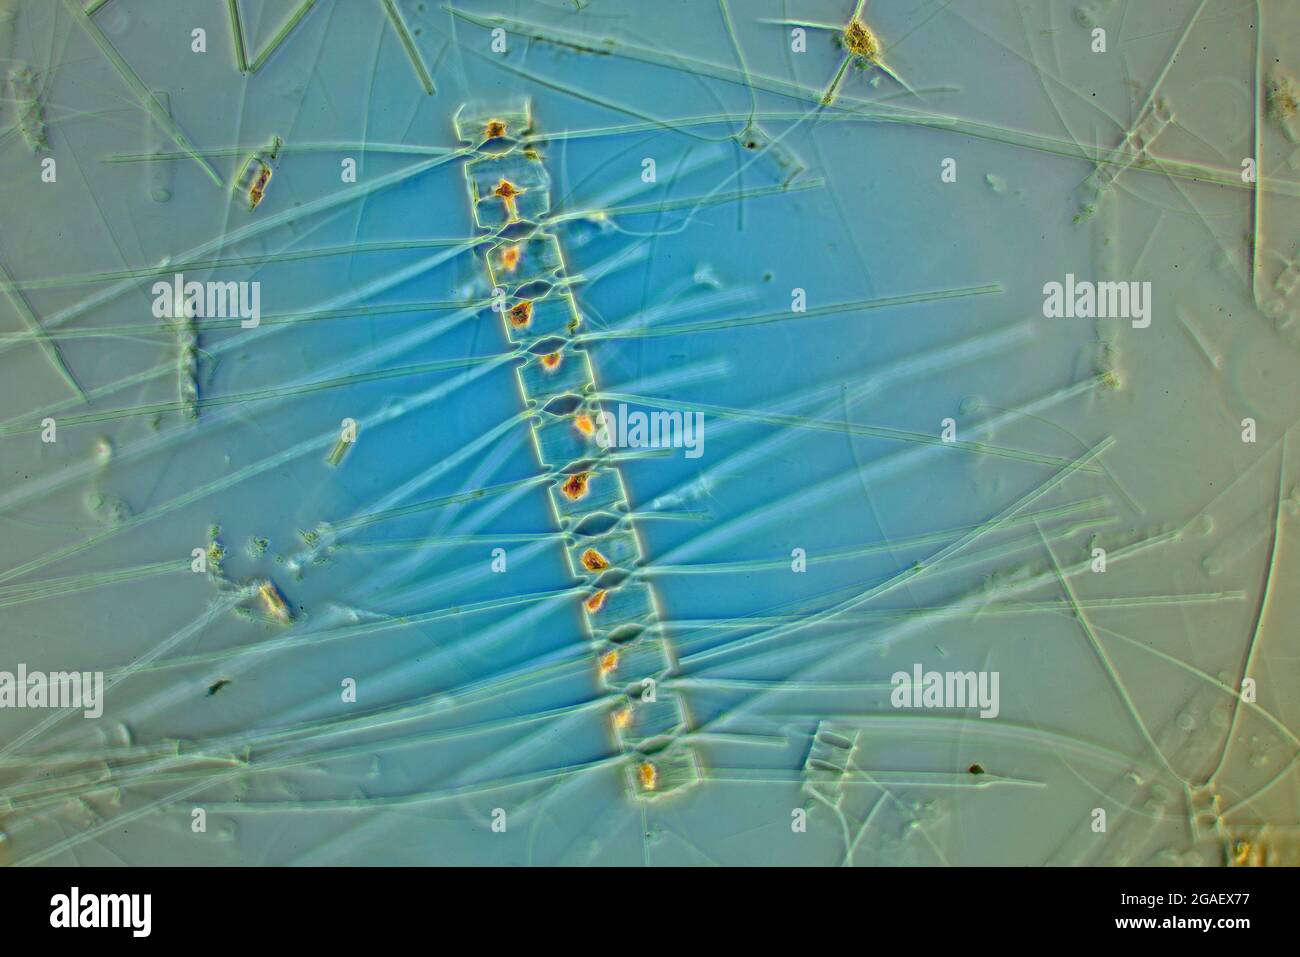 Marine Phytoplankton, Bacteriastrum, diatoms/plankton from the Gullman fjord, Sweden 1995, PHOTOMICROGRAPH Stock Photo